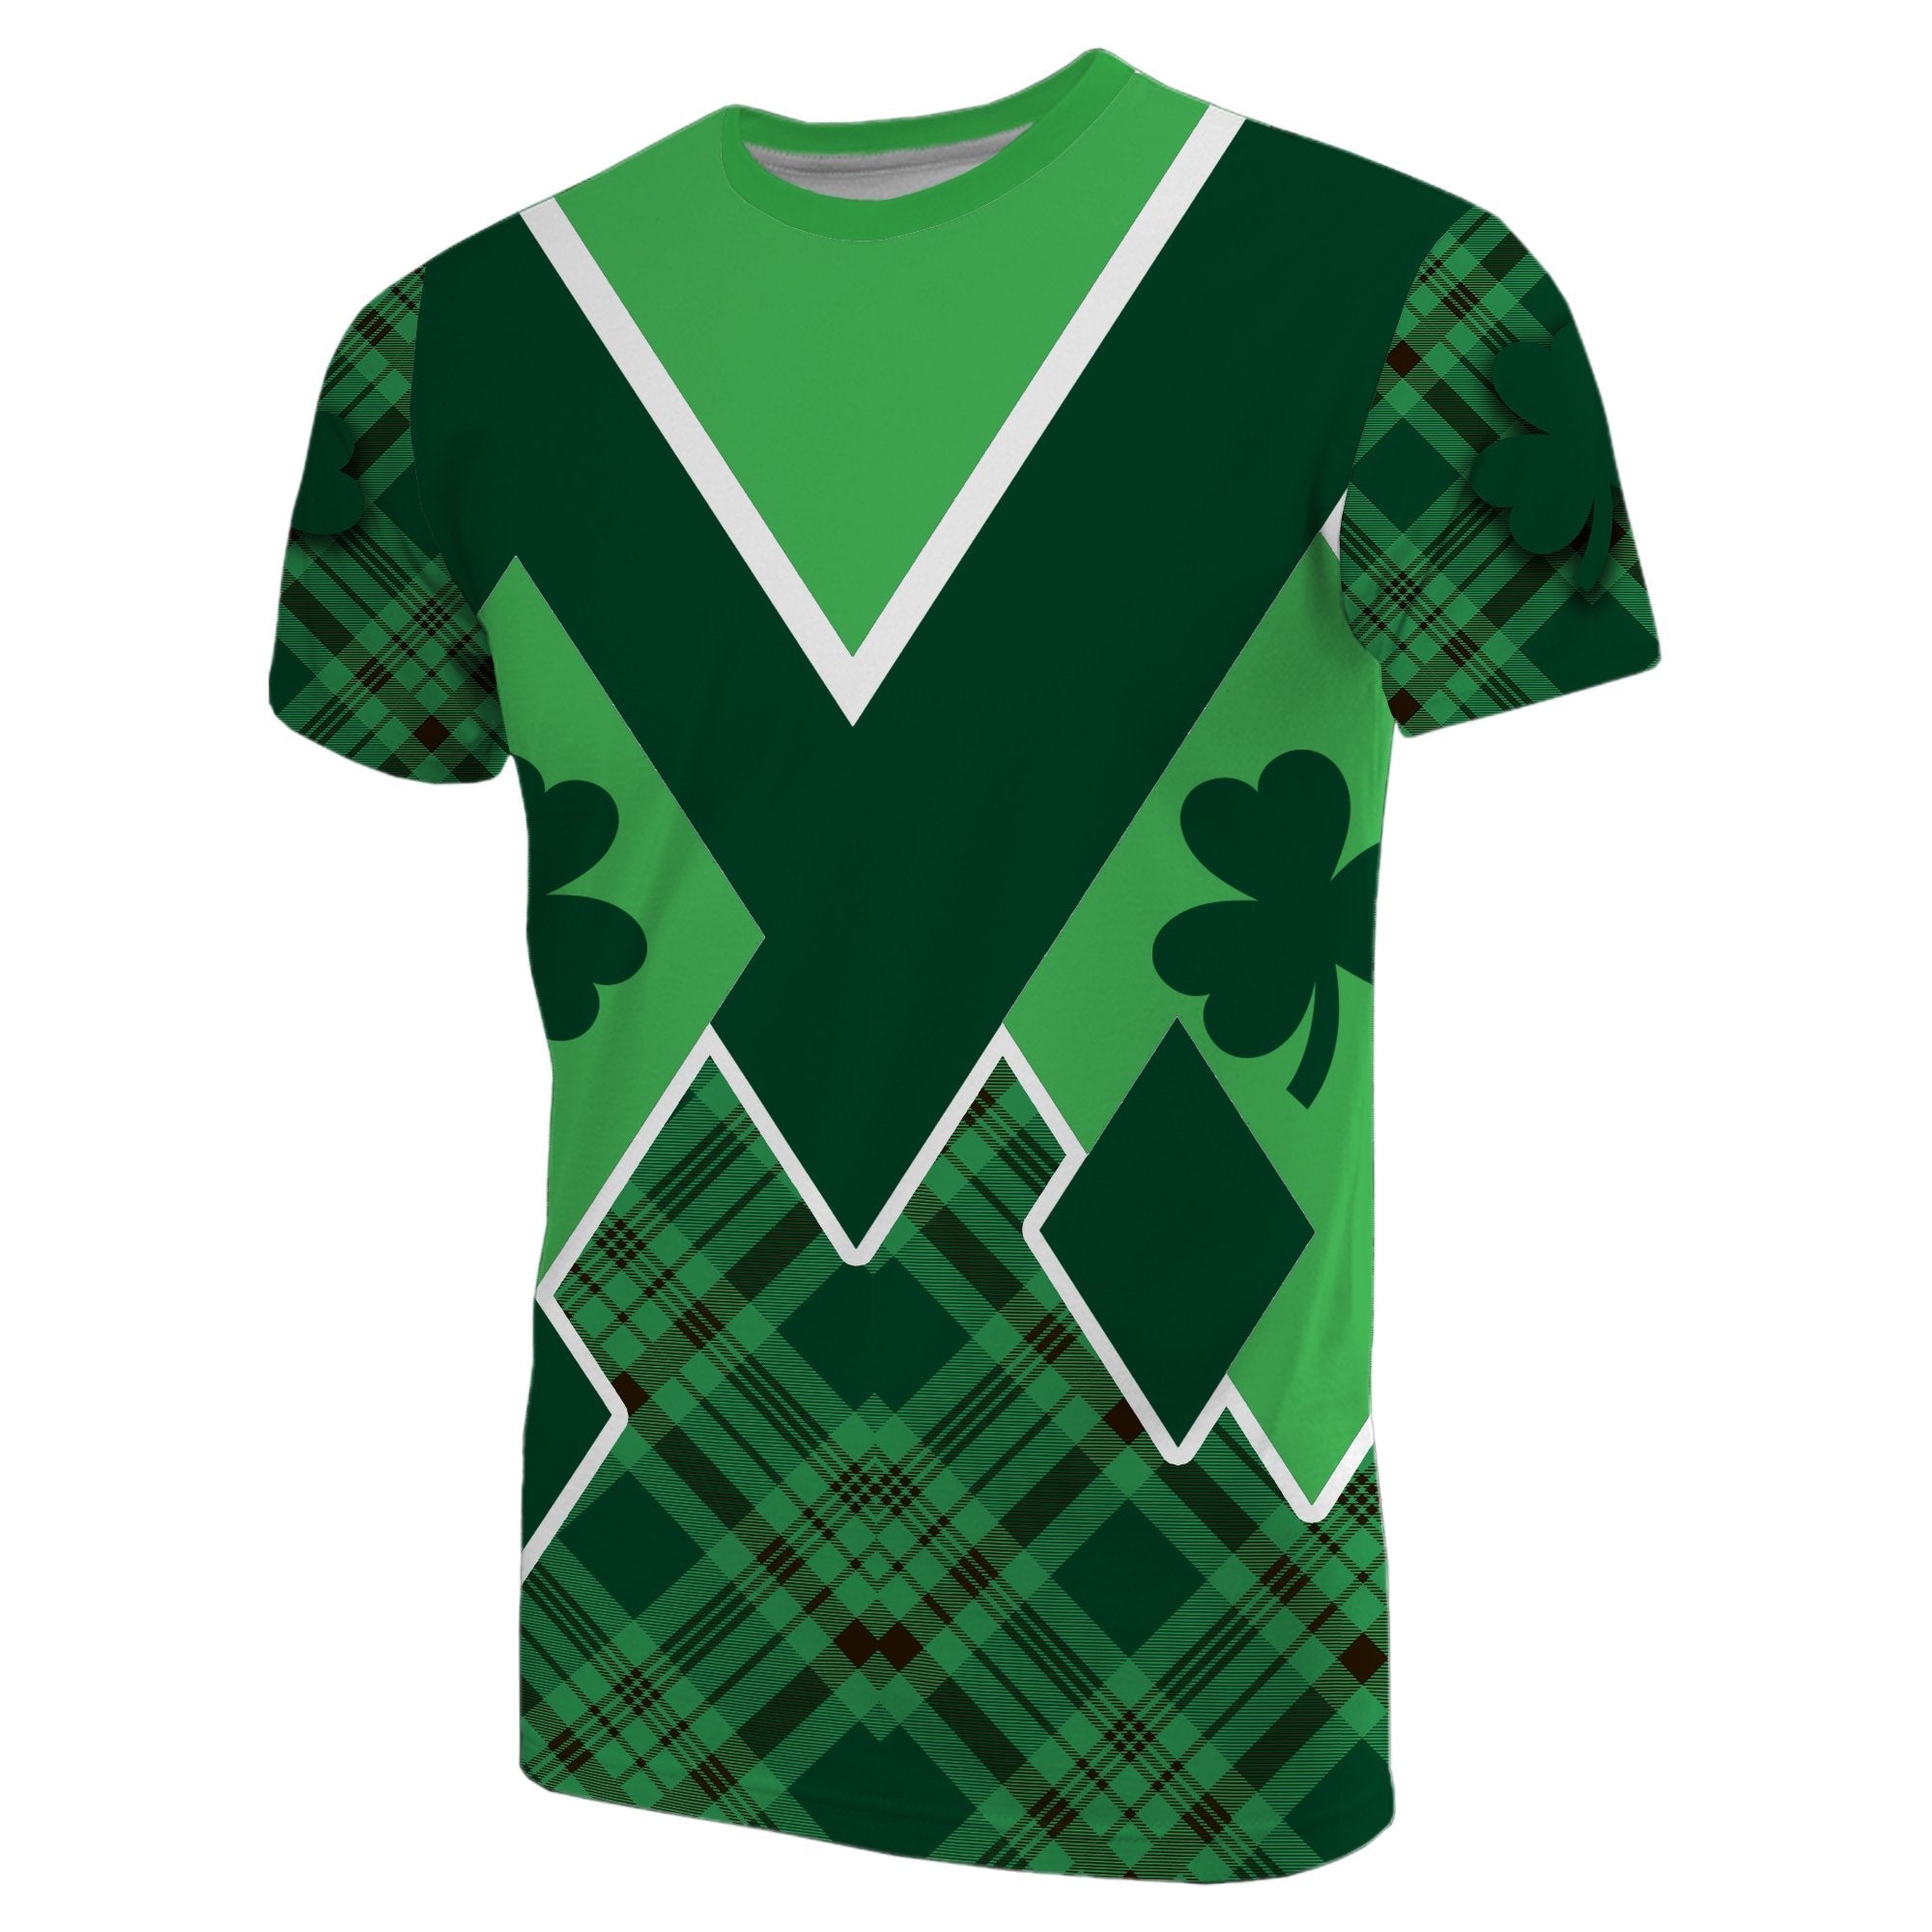 st-patrick-s-day-ireland-t-shirt-shamrock